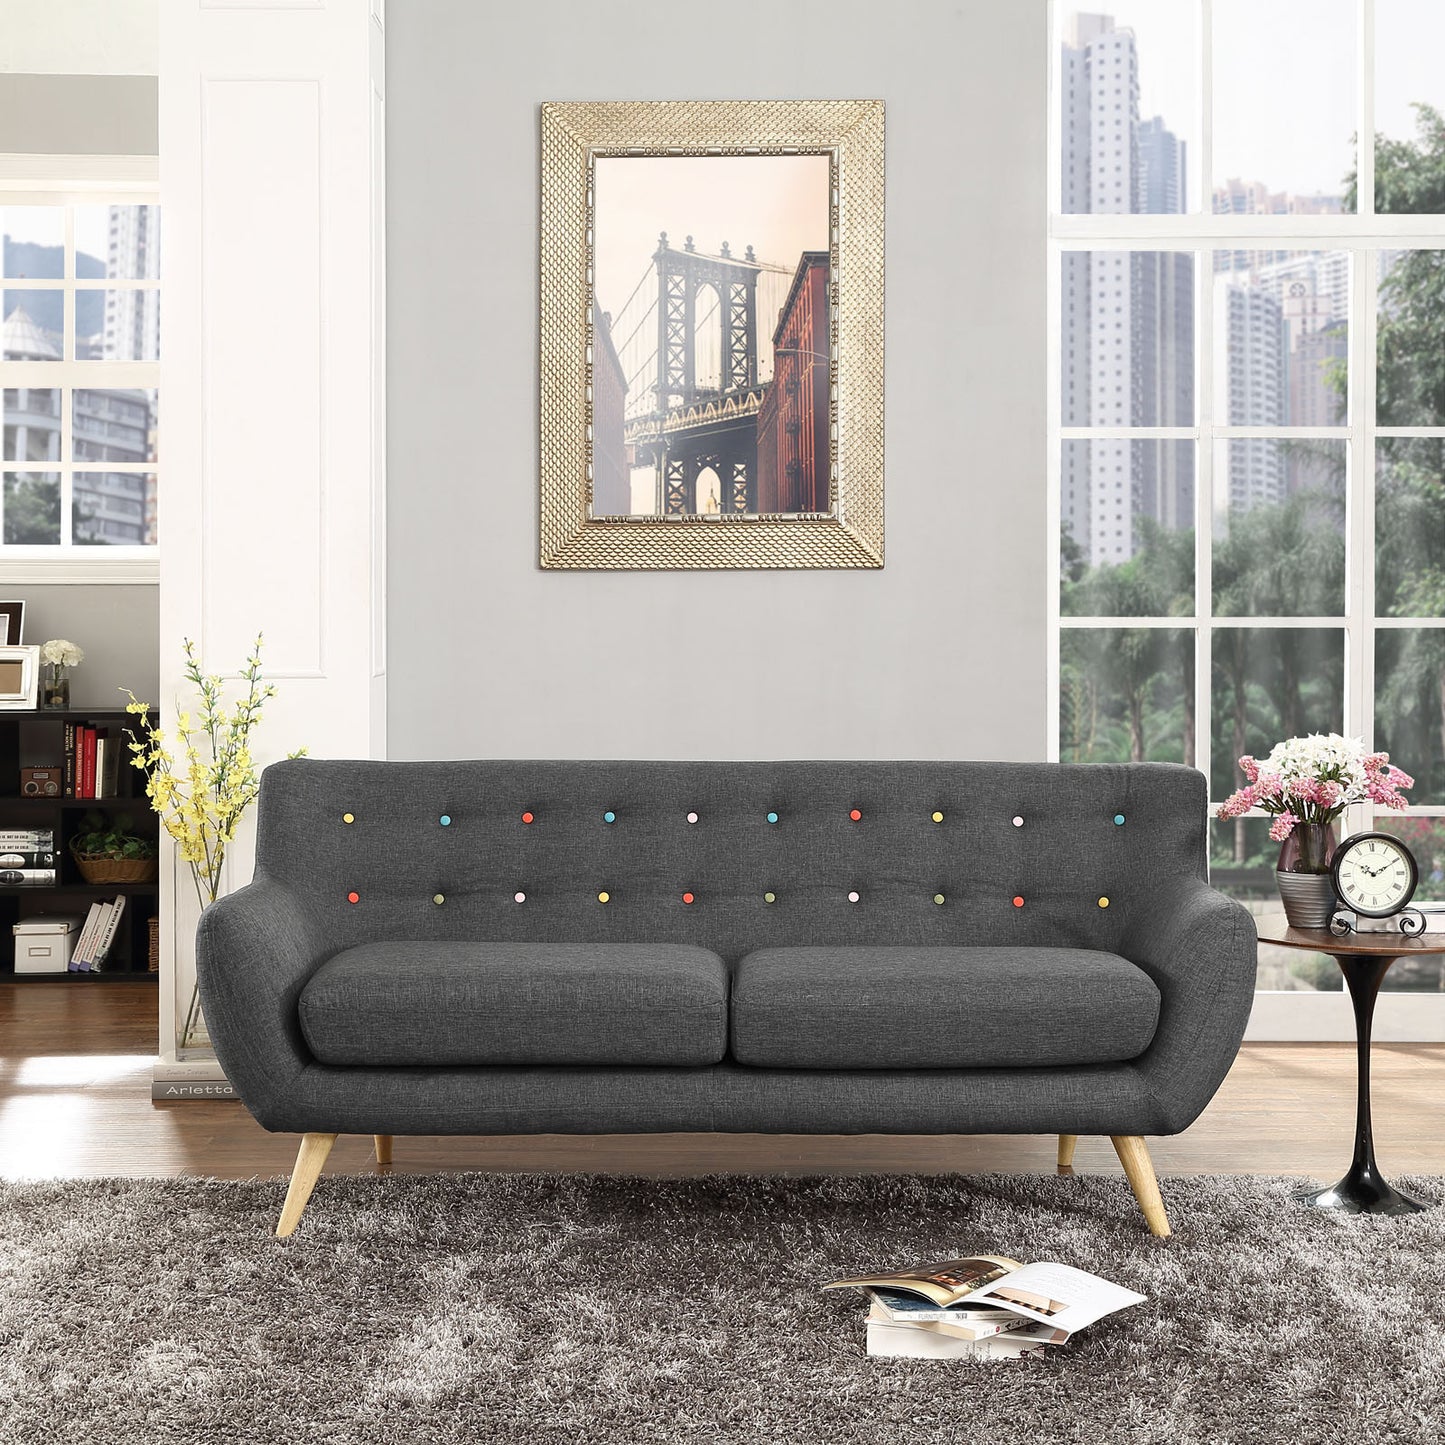 Groovy Sofa - living-essentials